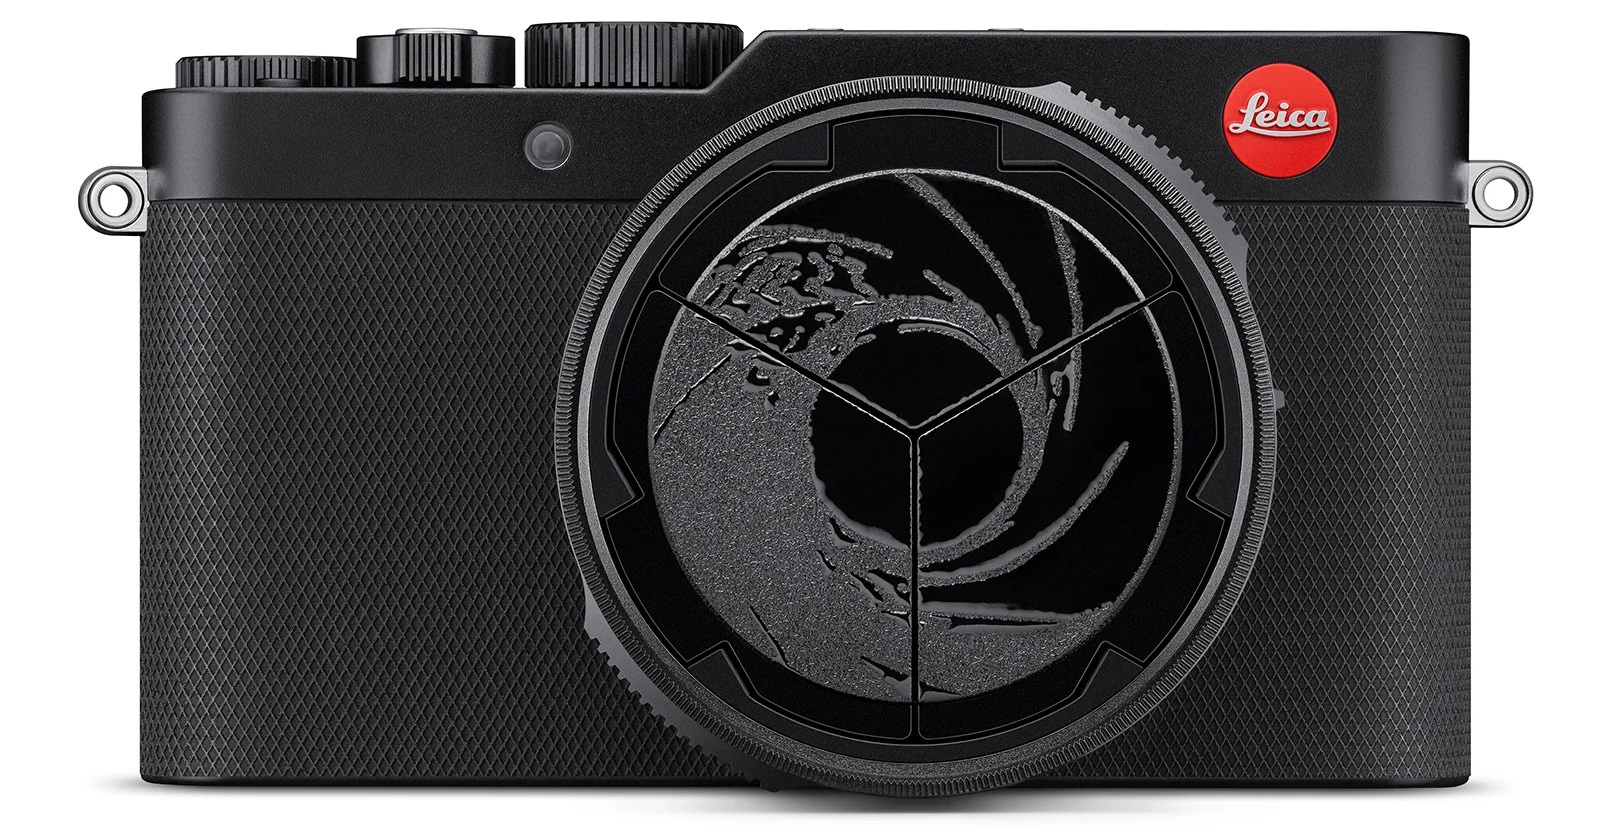 Leica D-Lux 7 Digital Camera Street Kit